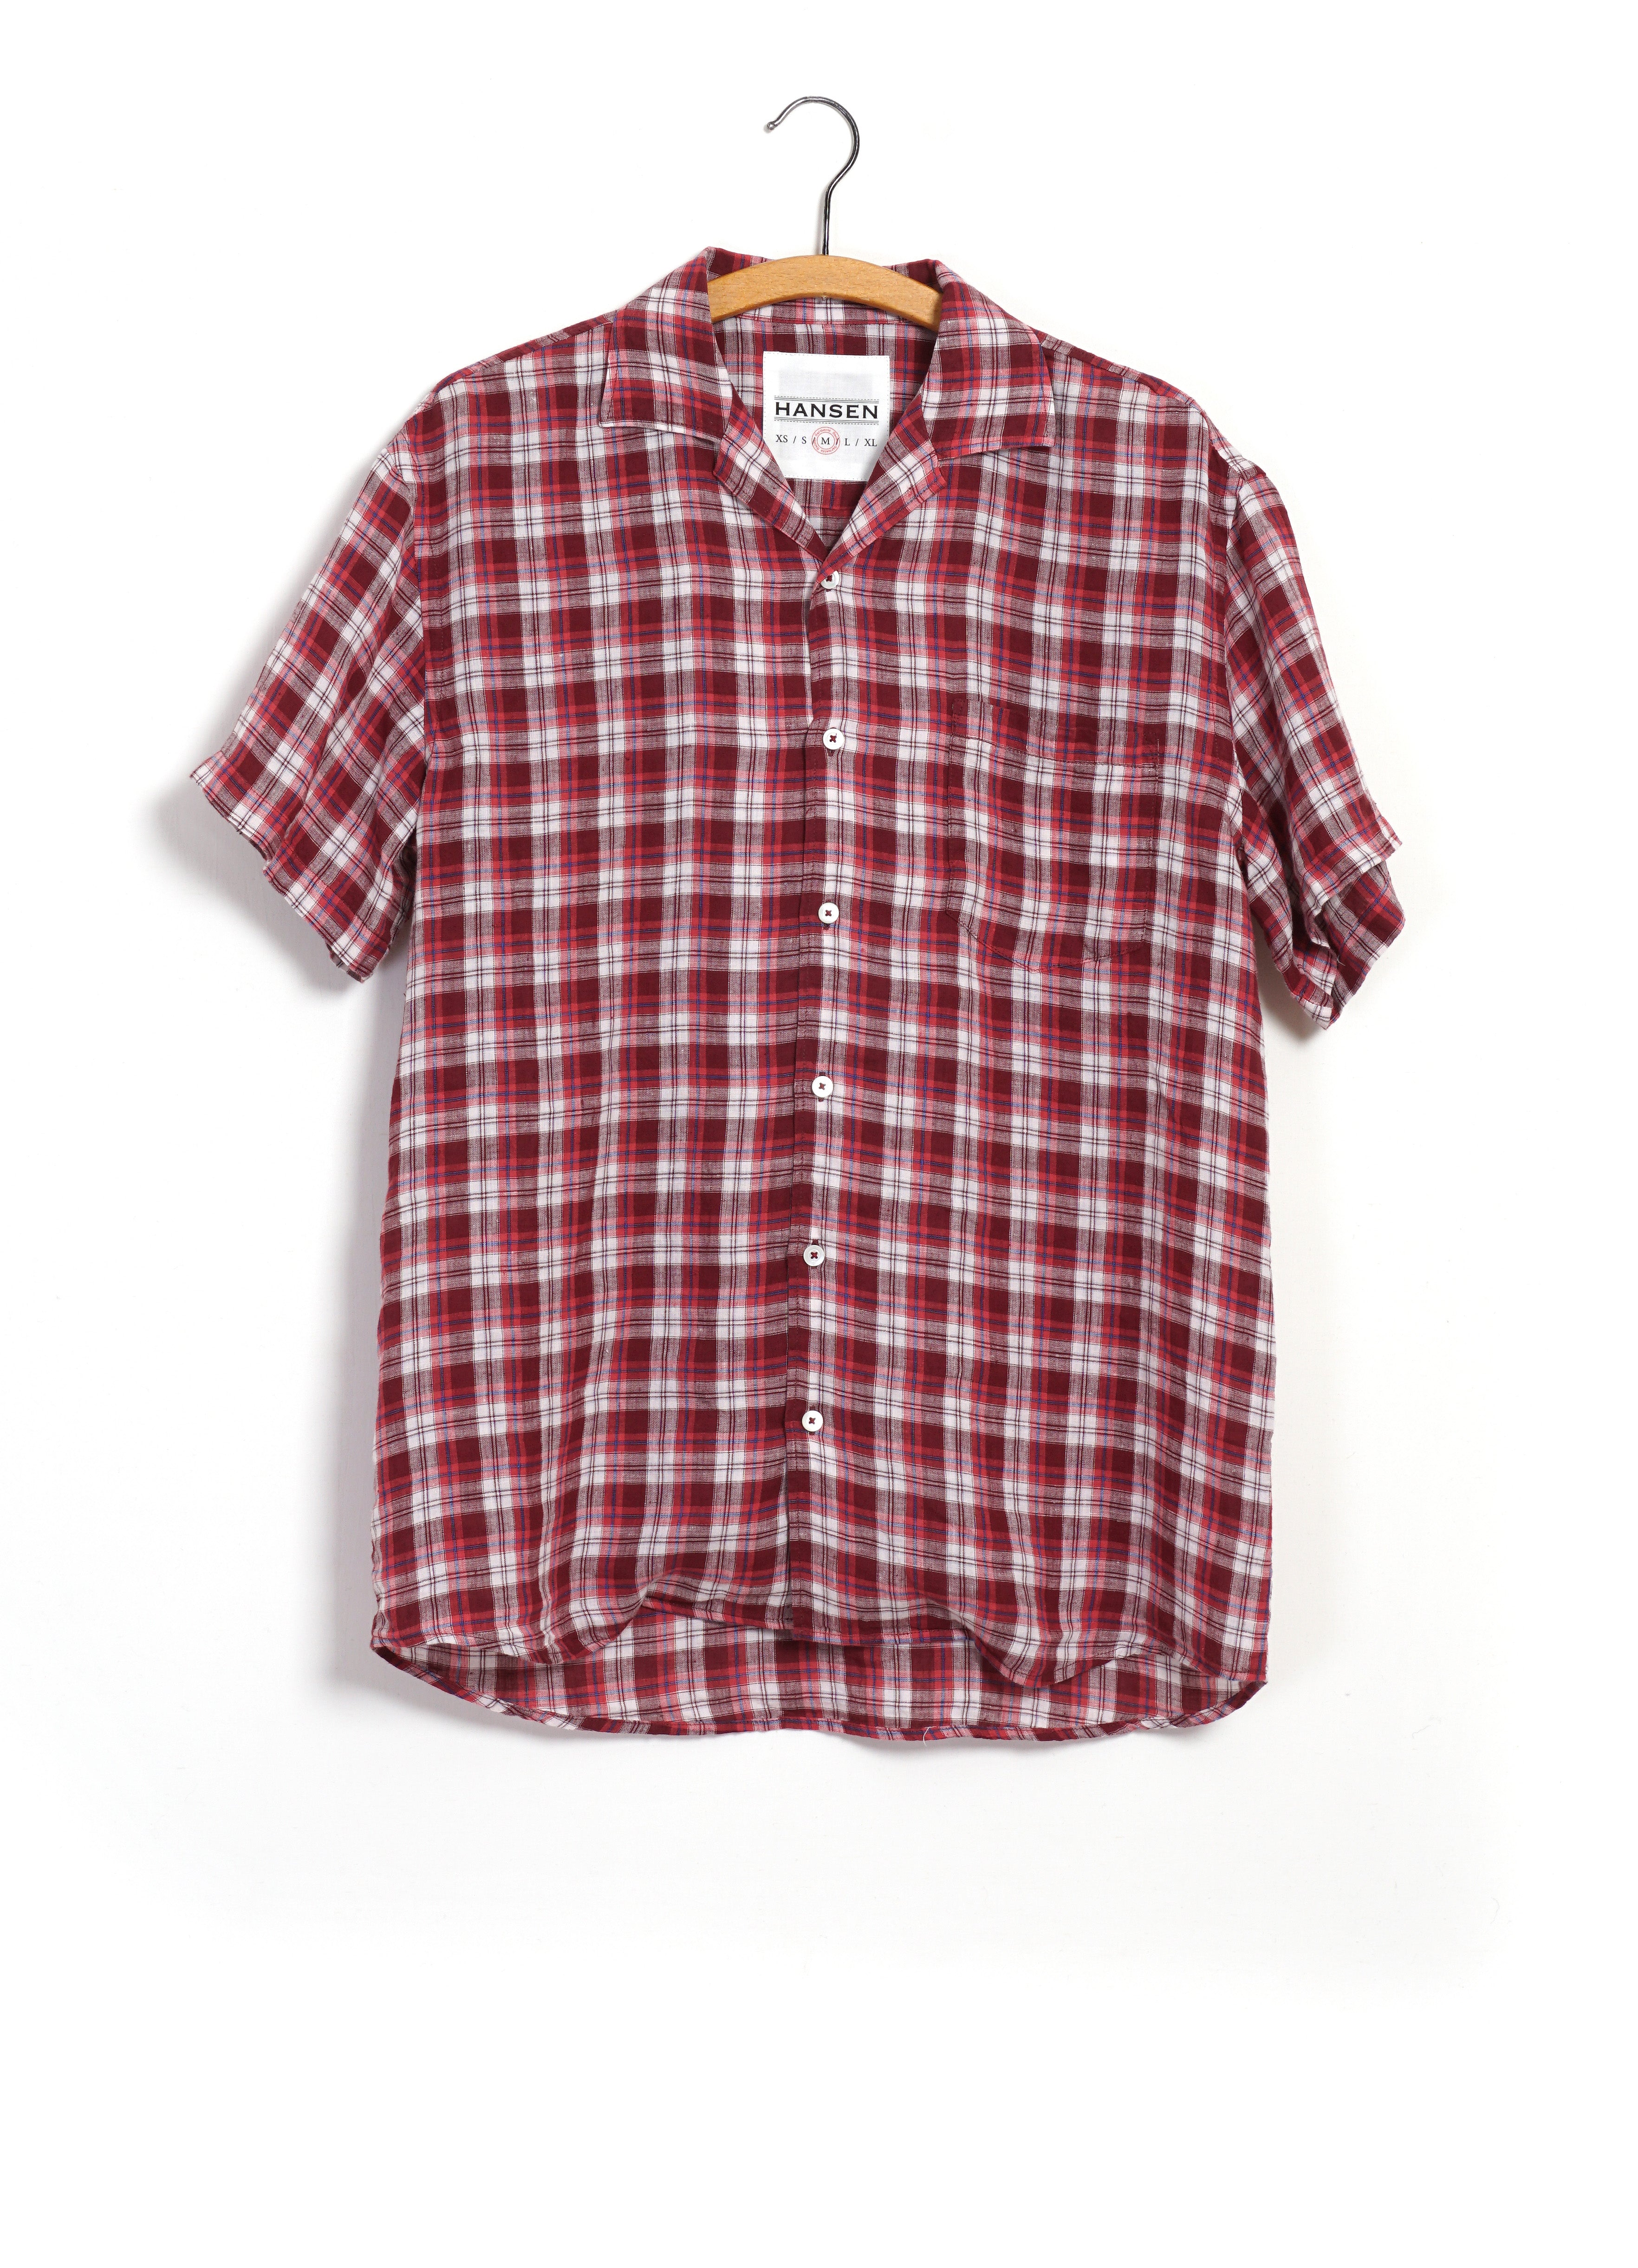 JONNY | Short Sleeve Shirt | Small Red Checks